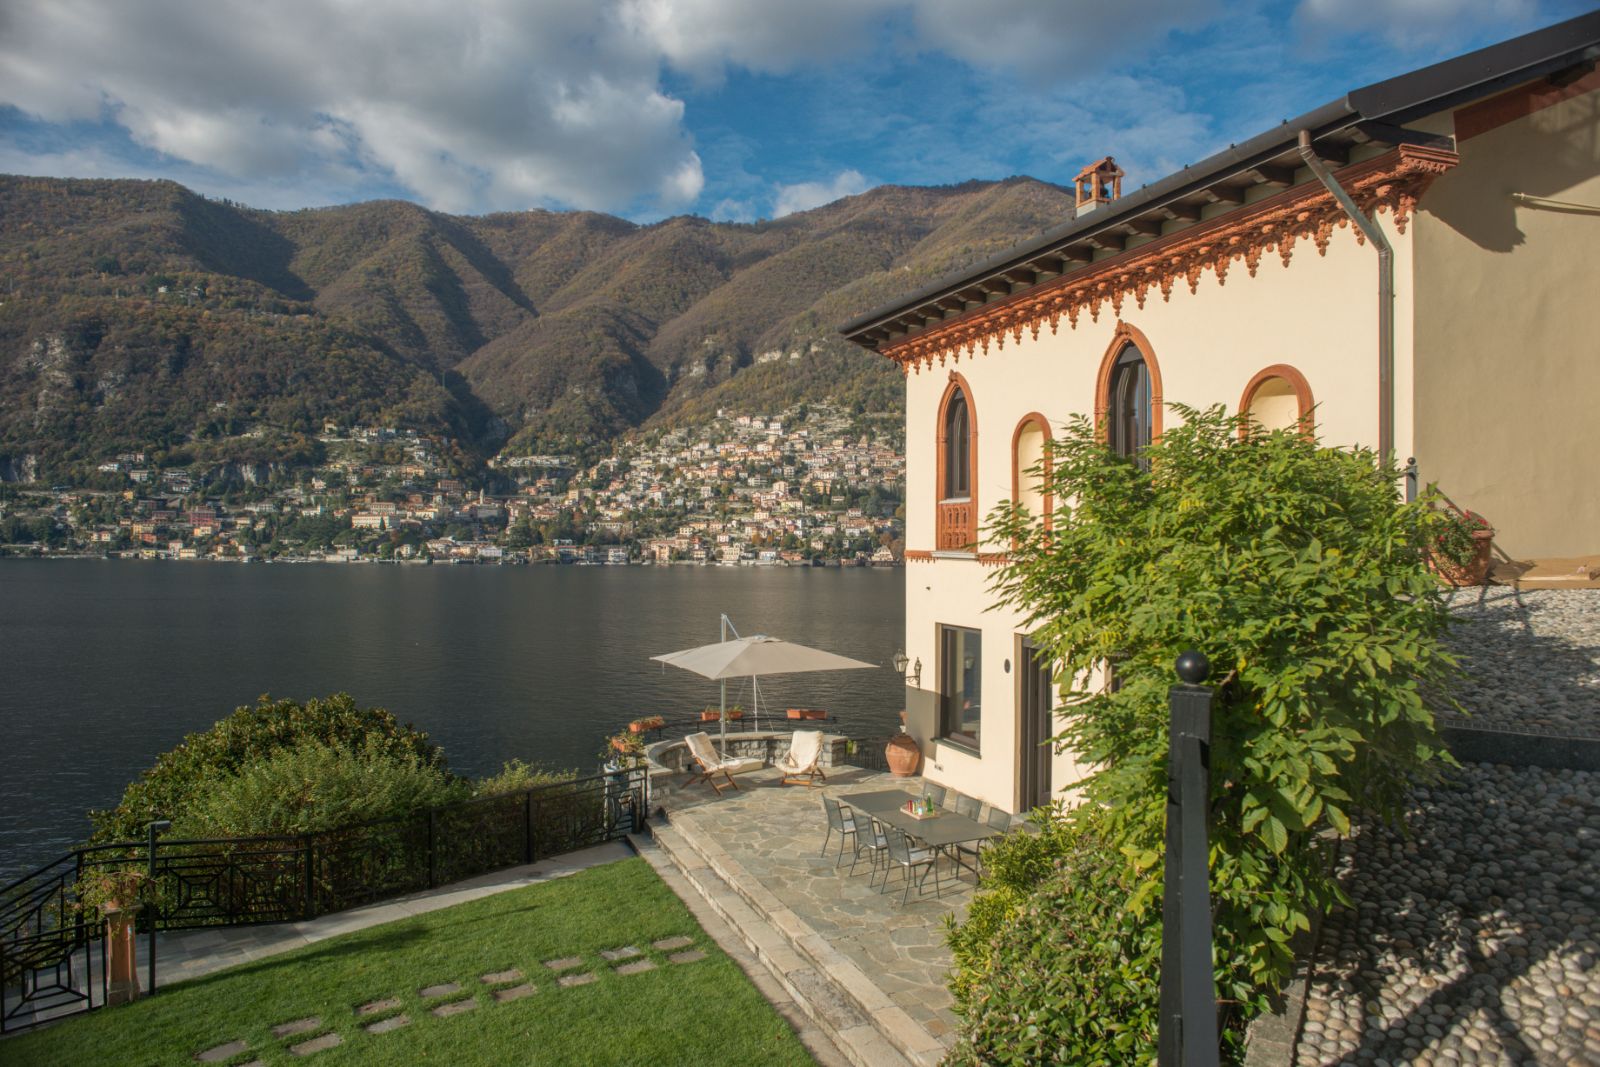 View 1 at Villa Giada in Lake Como